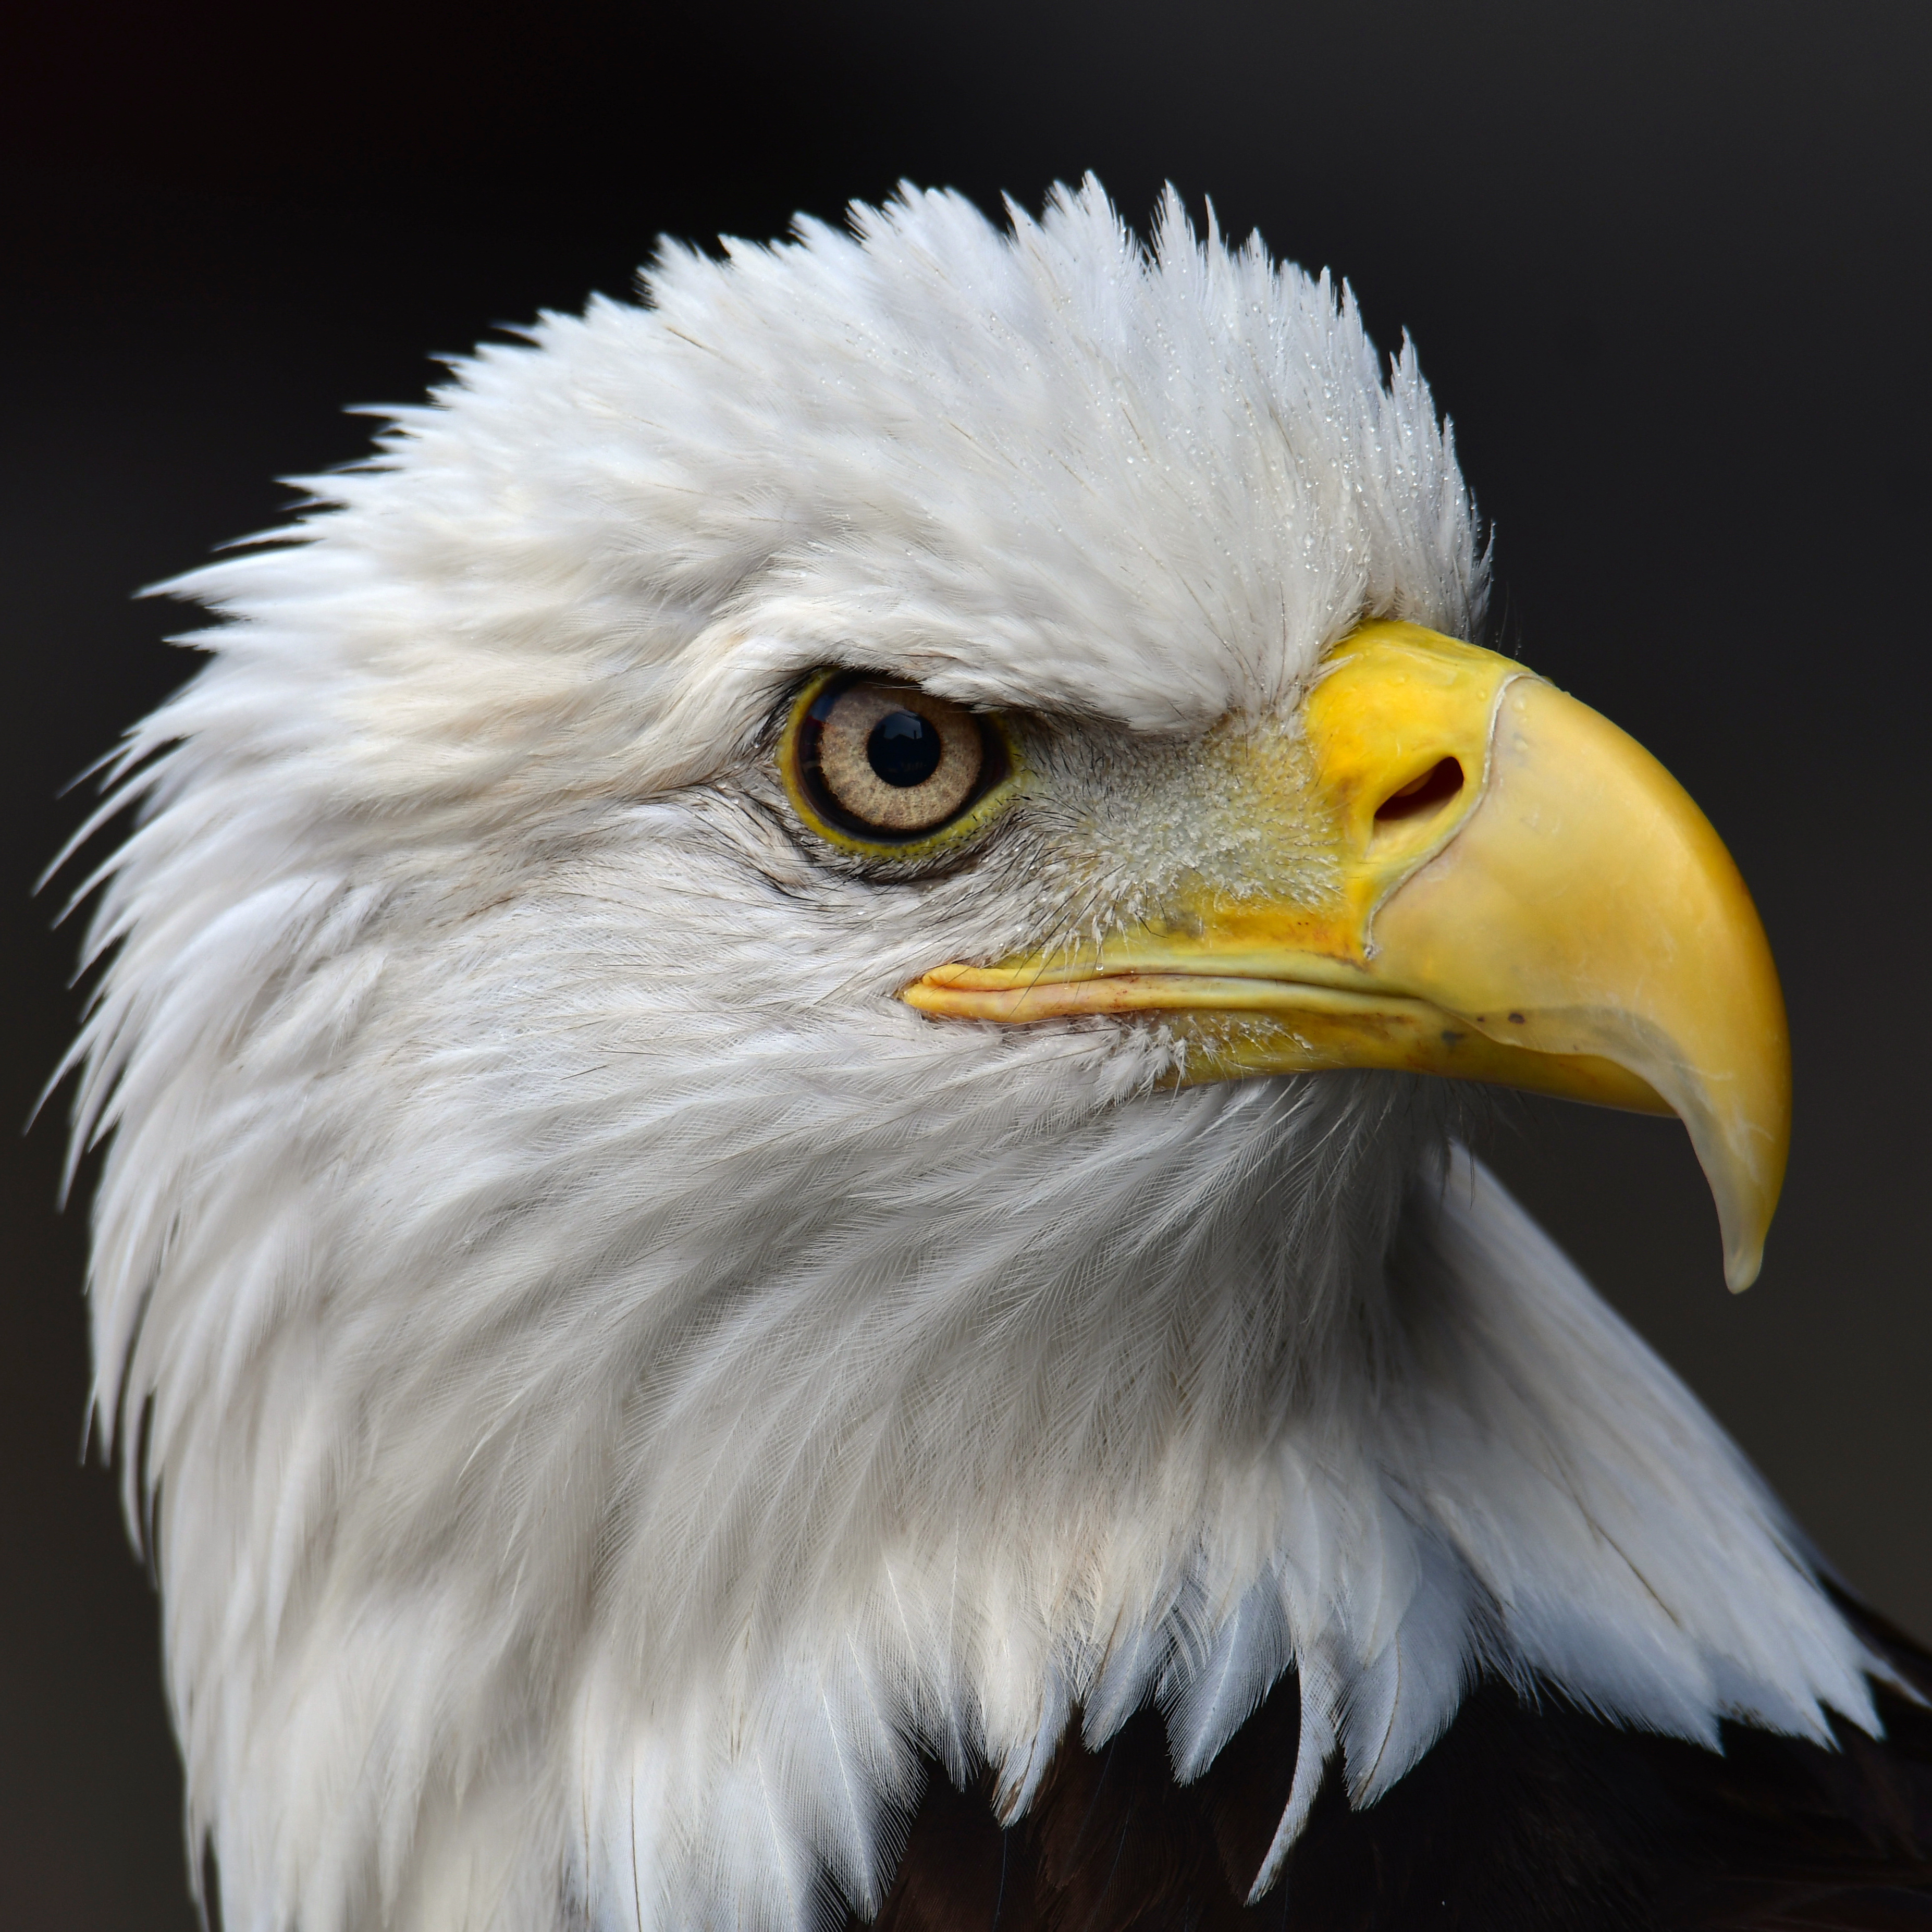 File:Bald eagle head closeup.jpg - Wikimedia Commons